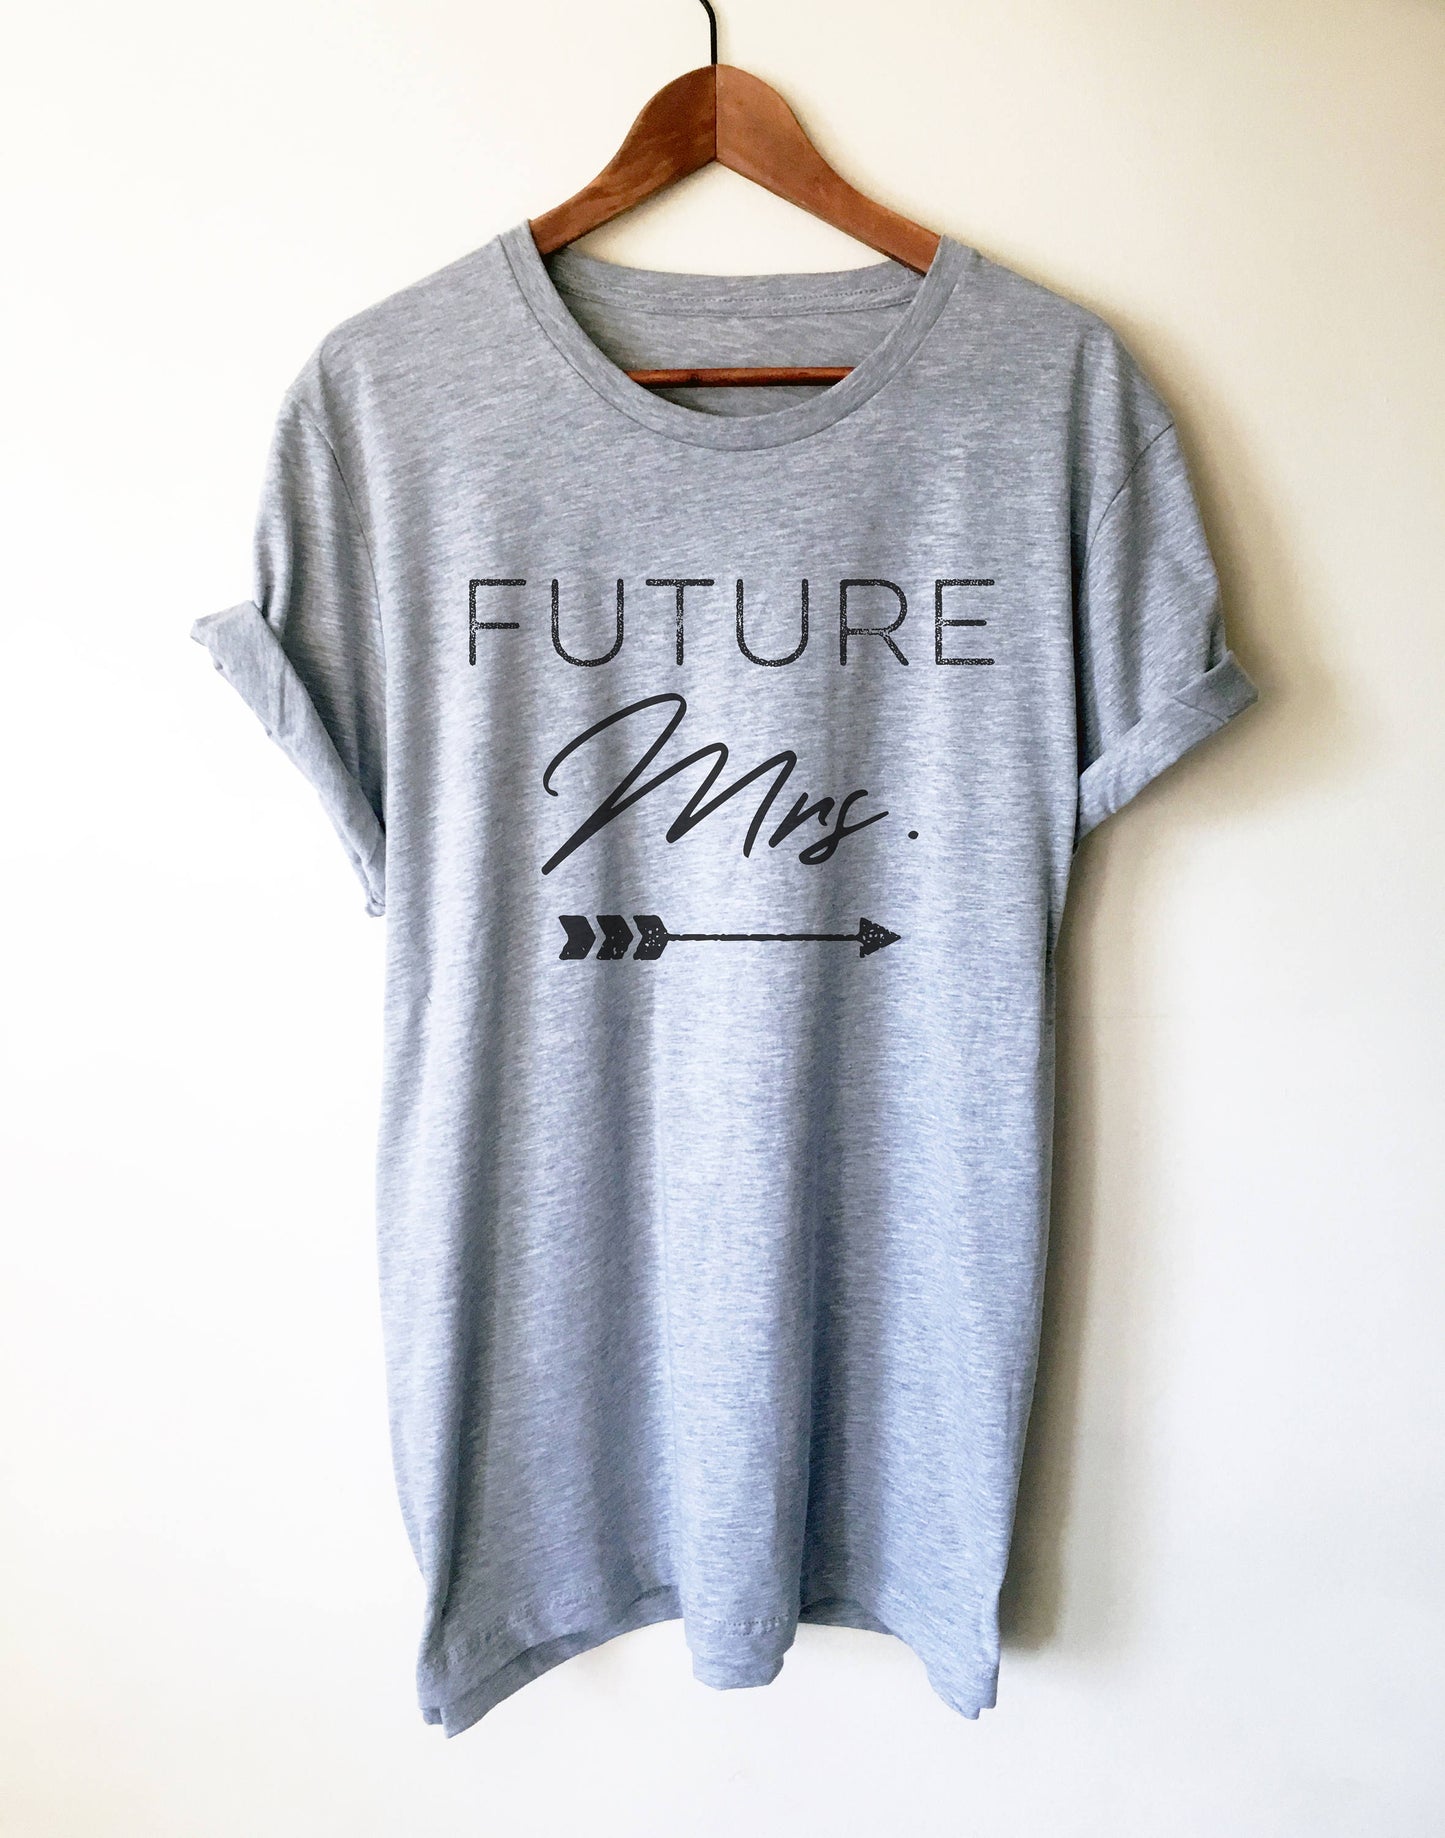 Future Mrs Unisex Shirt -  Bachelorette party, Bride shirt, Bachelorette shirts, Wedding shirt, Engagement shirt, Bridal shower gift